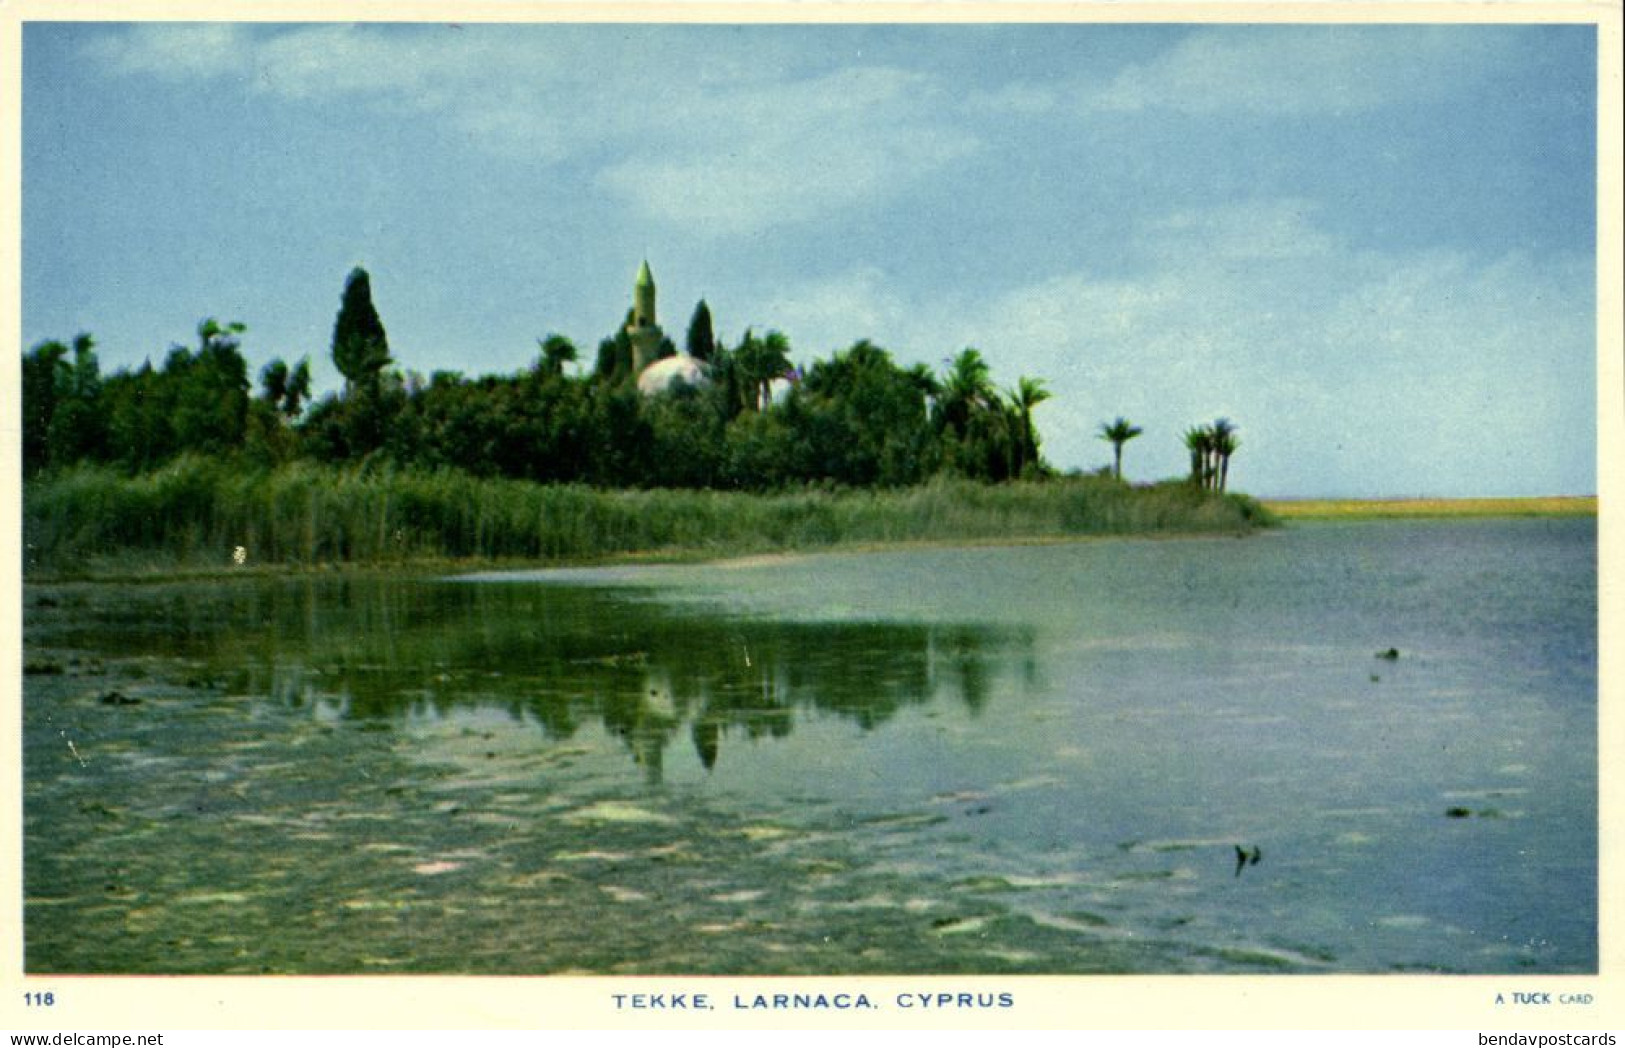 Cyprus, LARNACA, Hala Sultan Tekke Mosque (1960s) Raphael Tuck 118 Postcard - Chypre